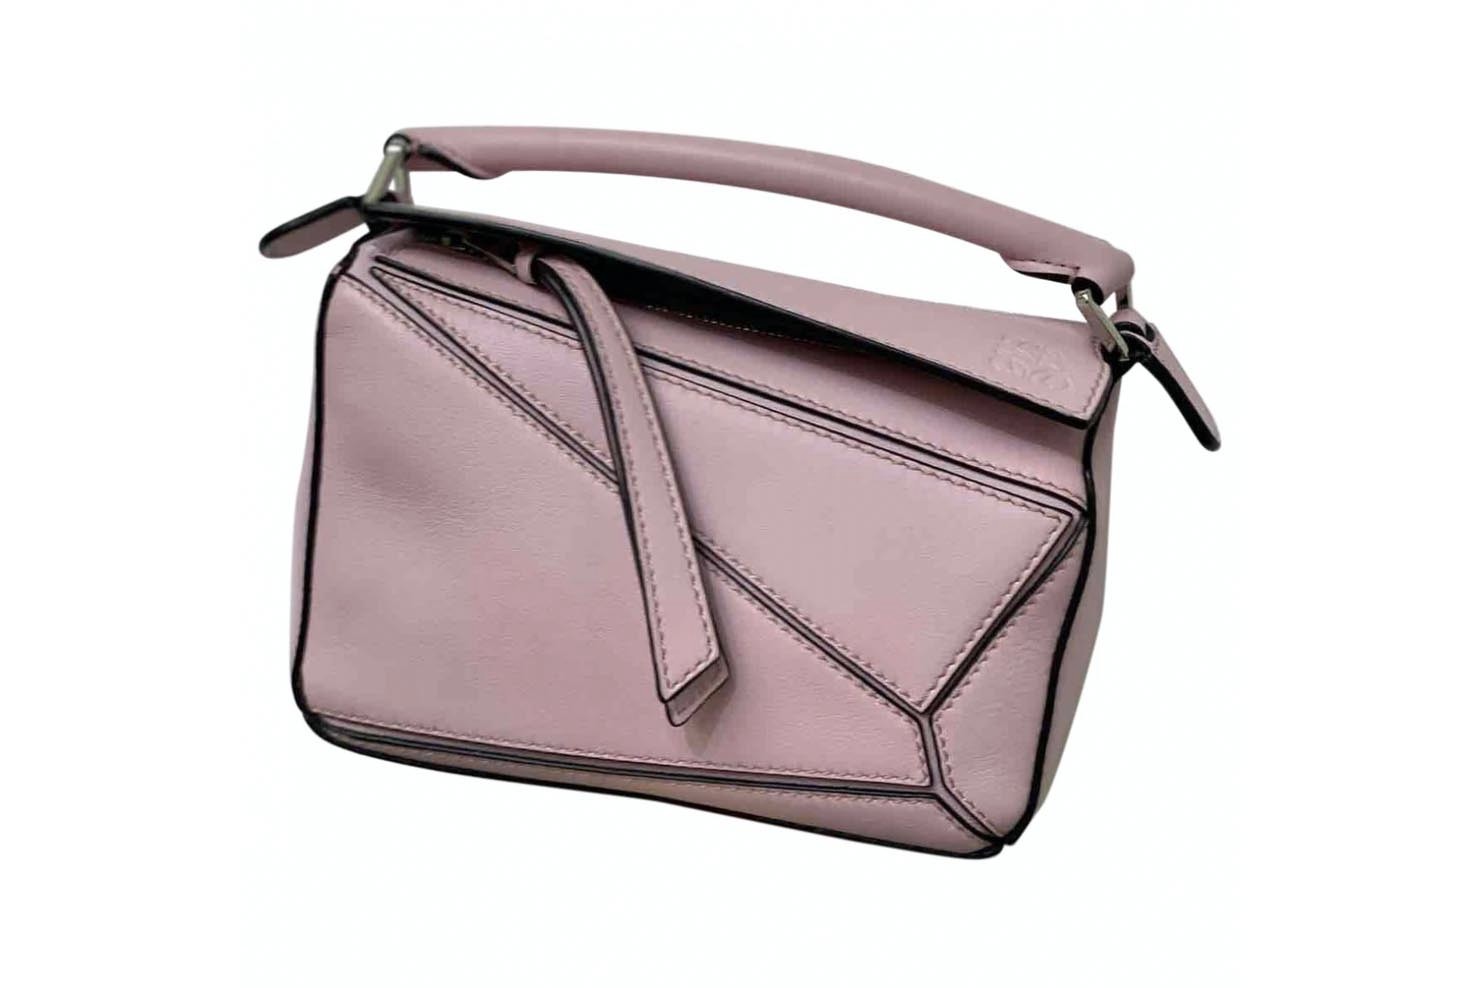 vintage handbags dior gucci louis vuitton designer accessories sustainable